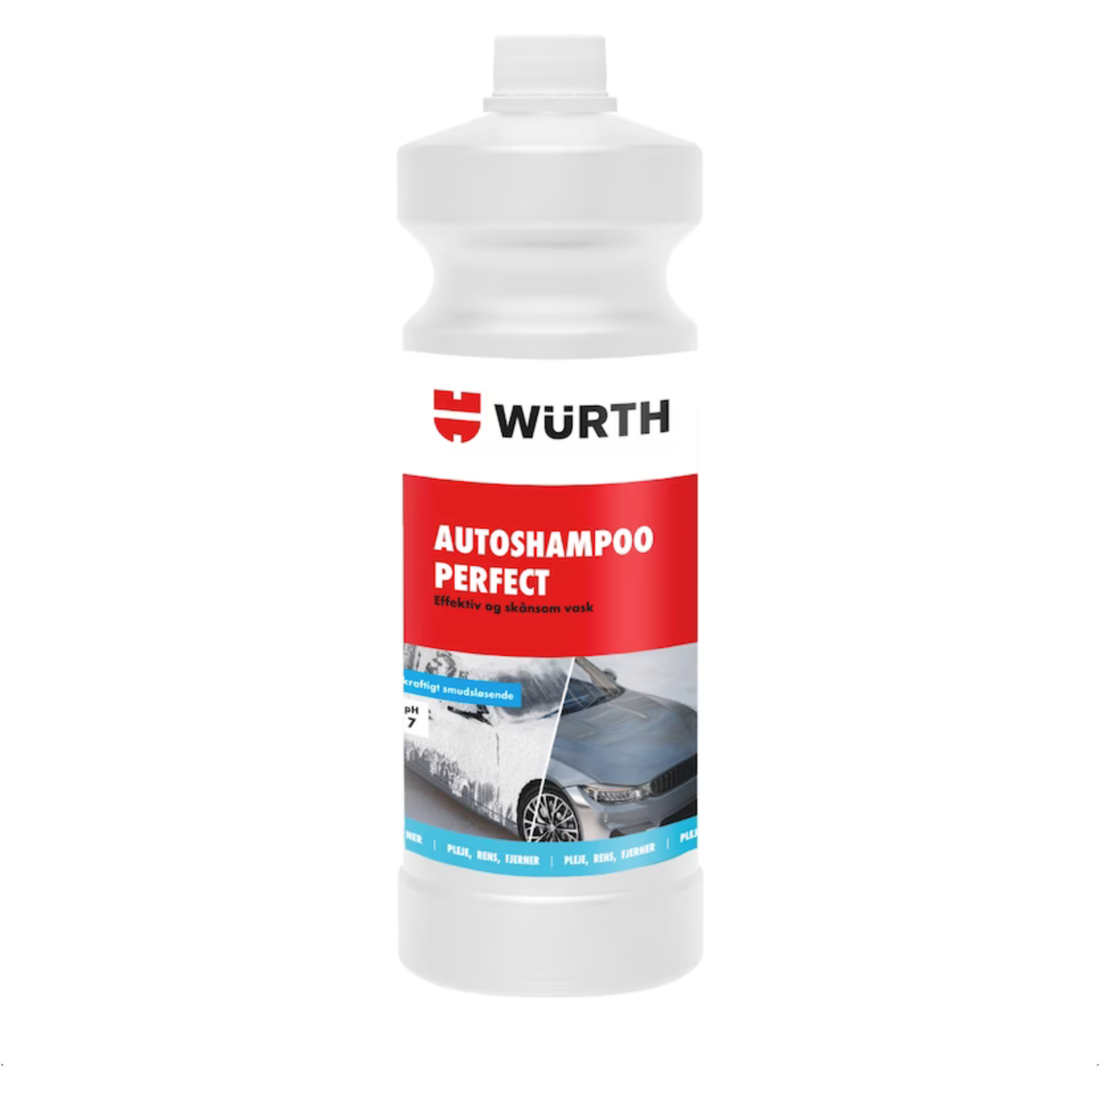 Autoshampoo 1L, effektiv og skånsom vask, Würth - BilligStyling